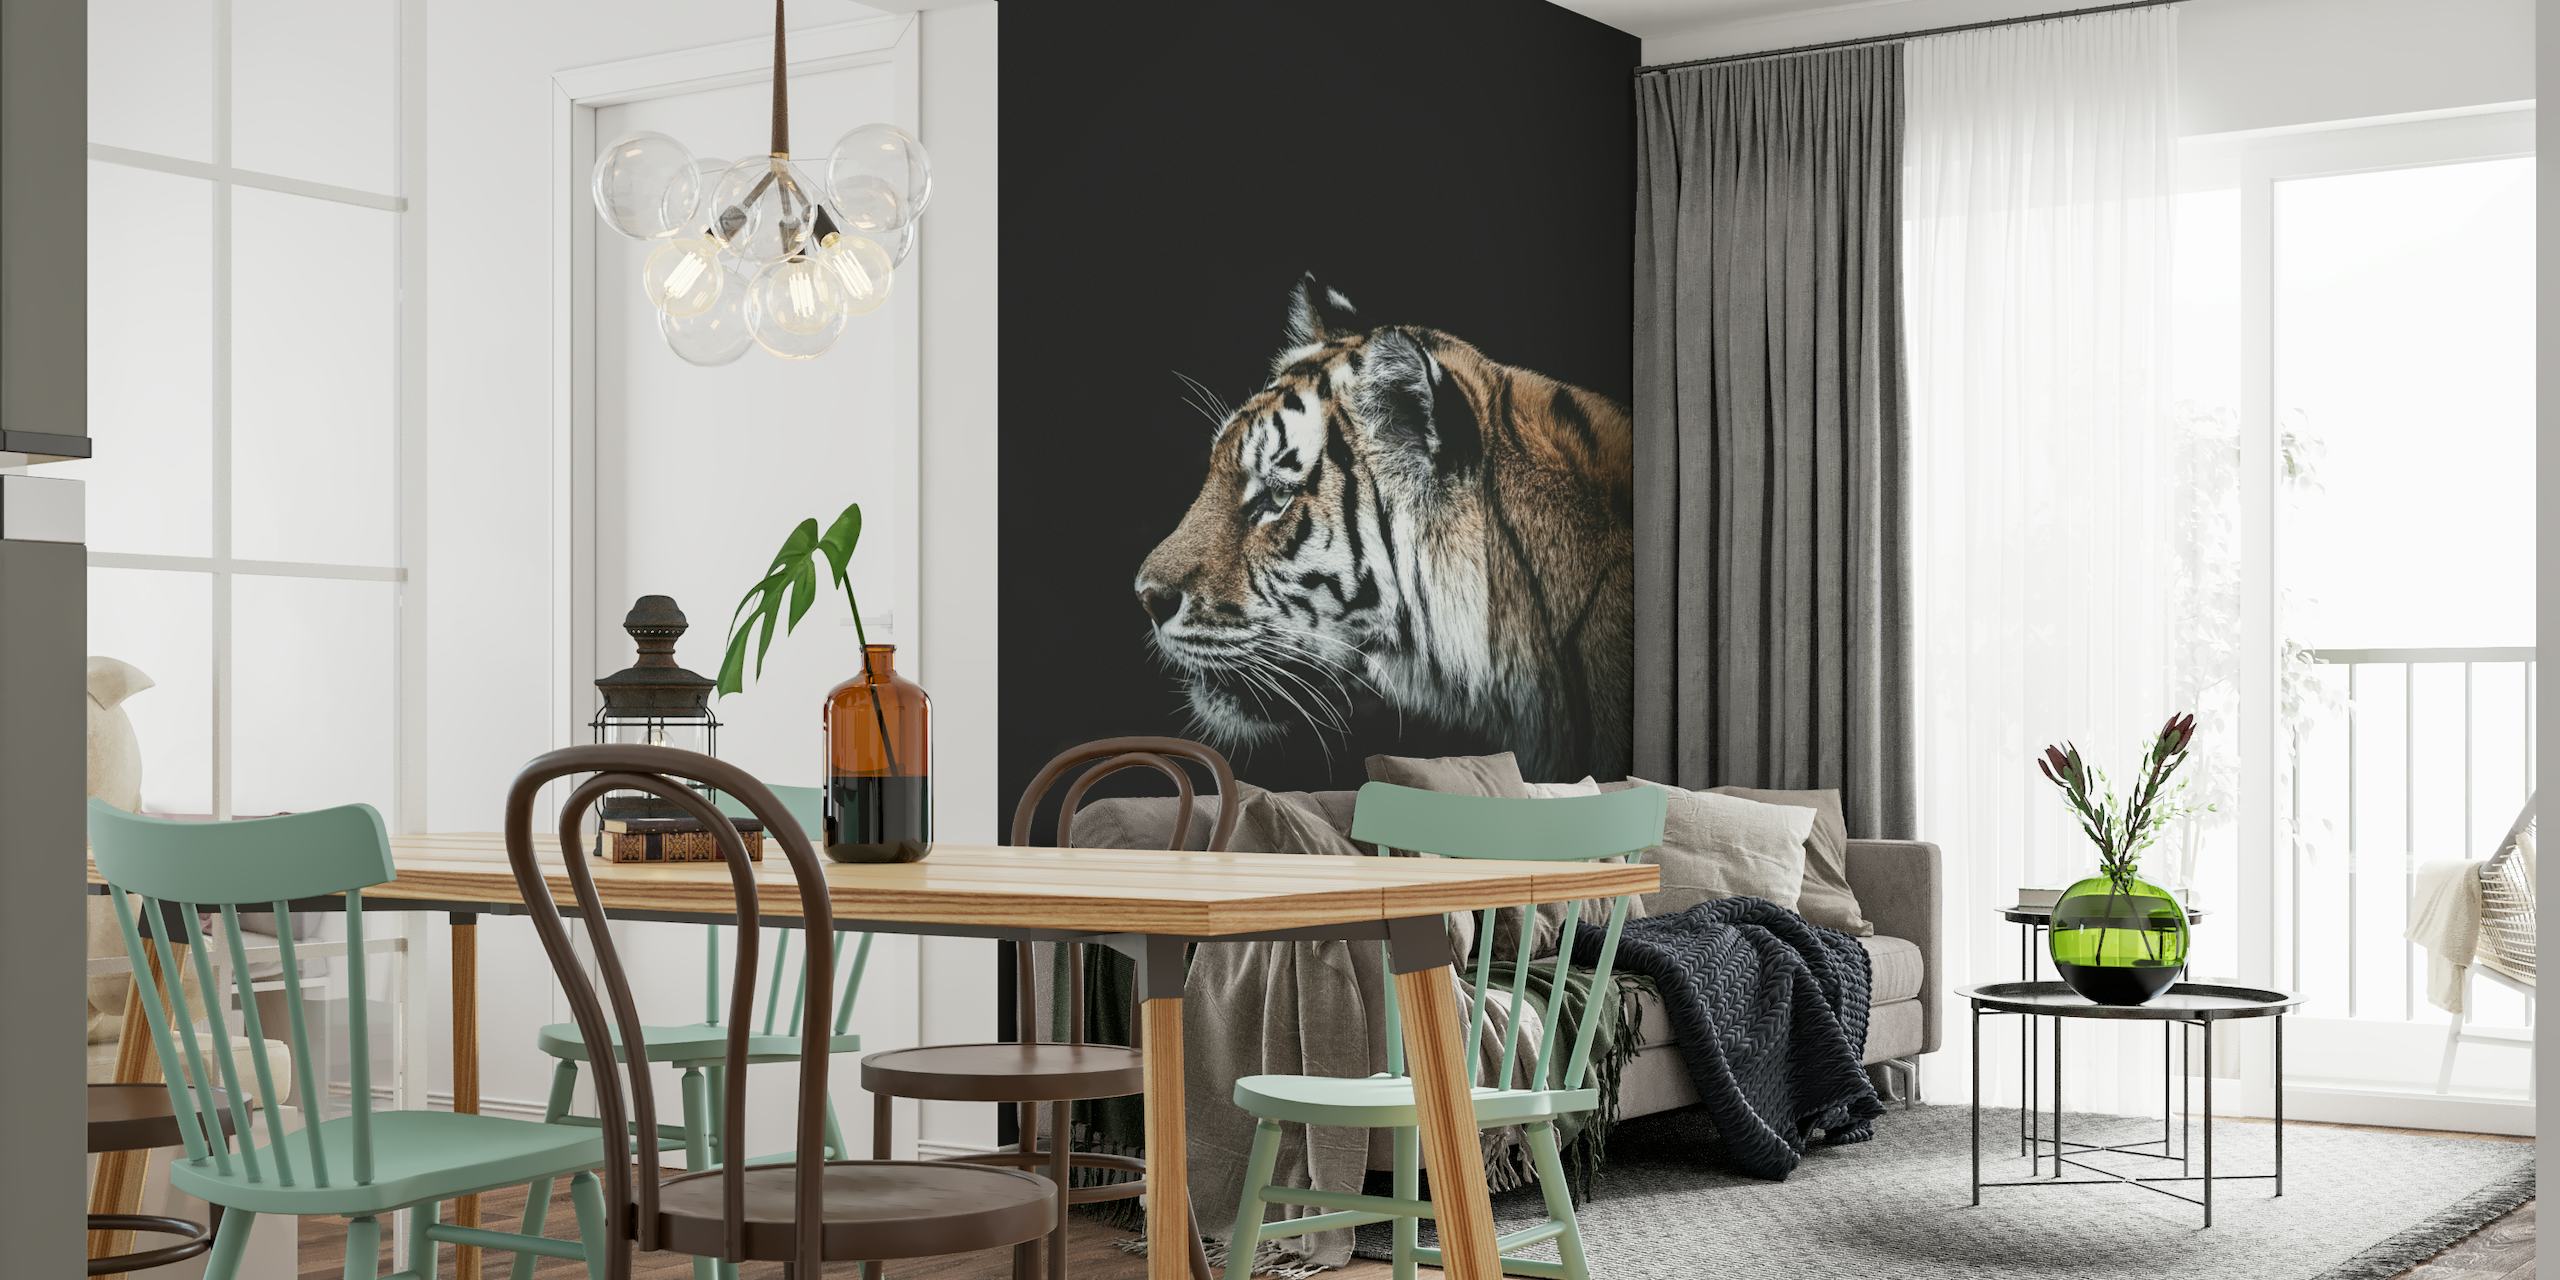 Standing Tiger wallpaper